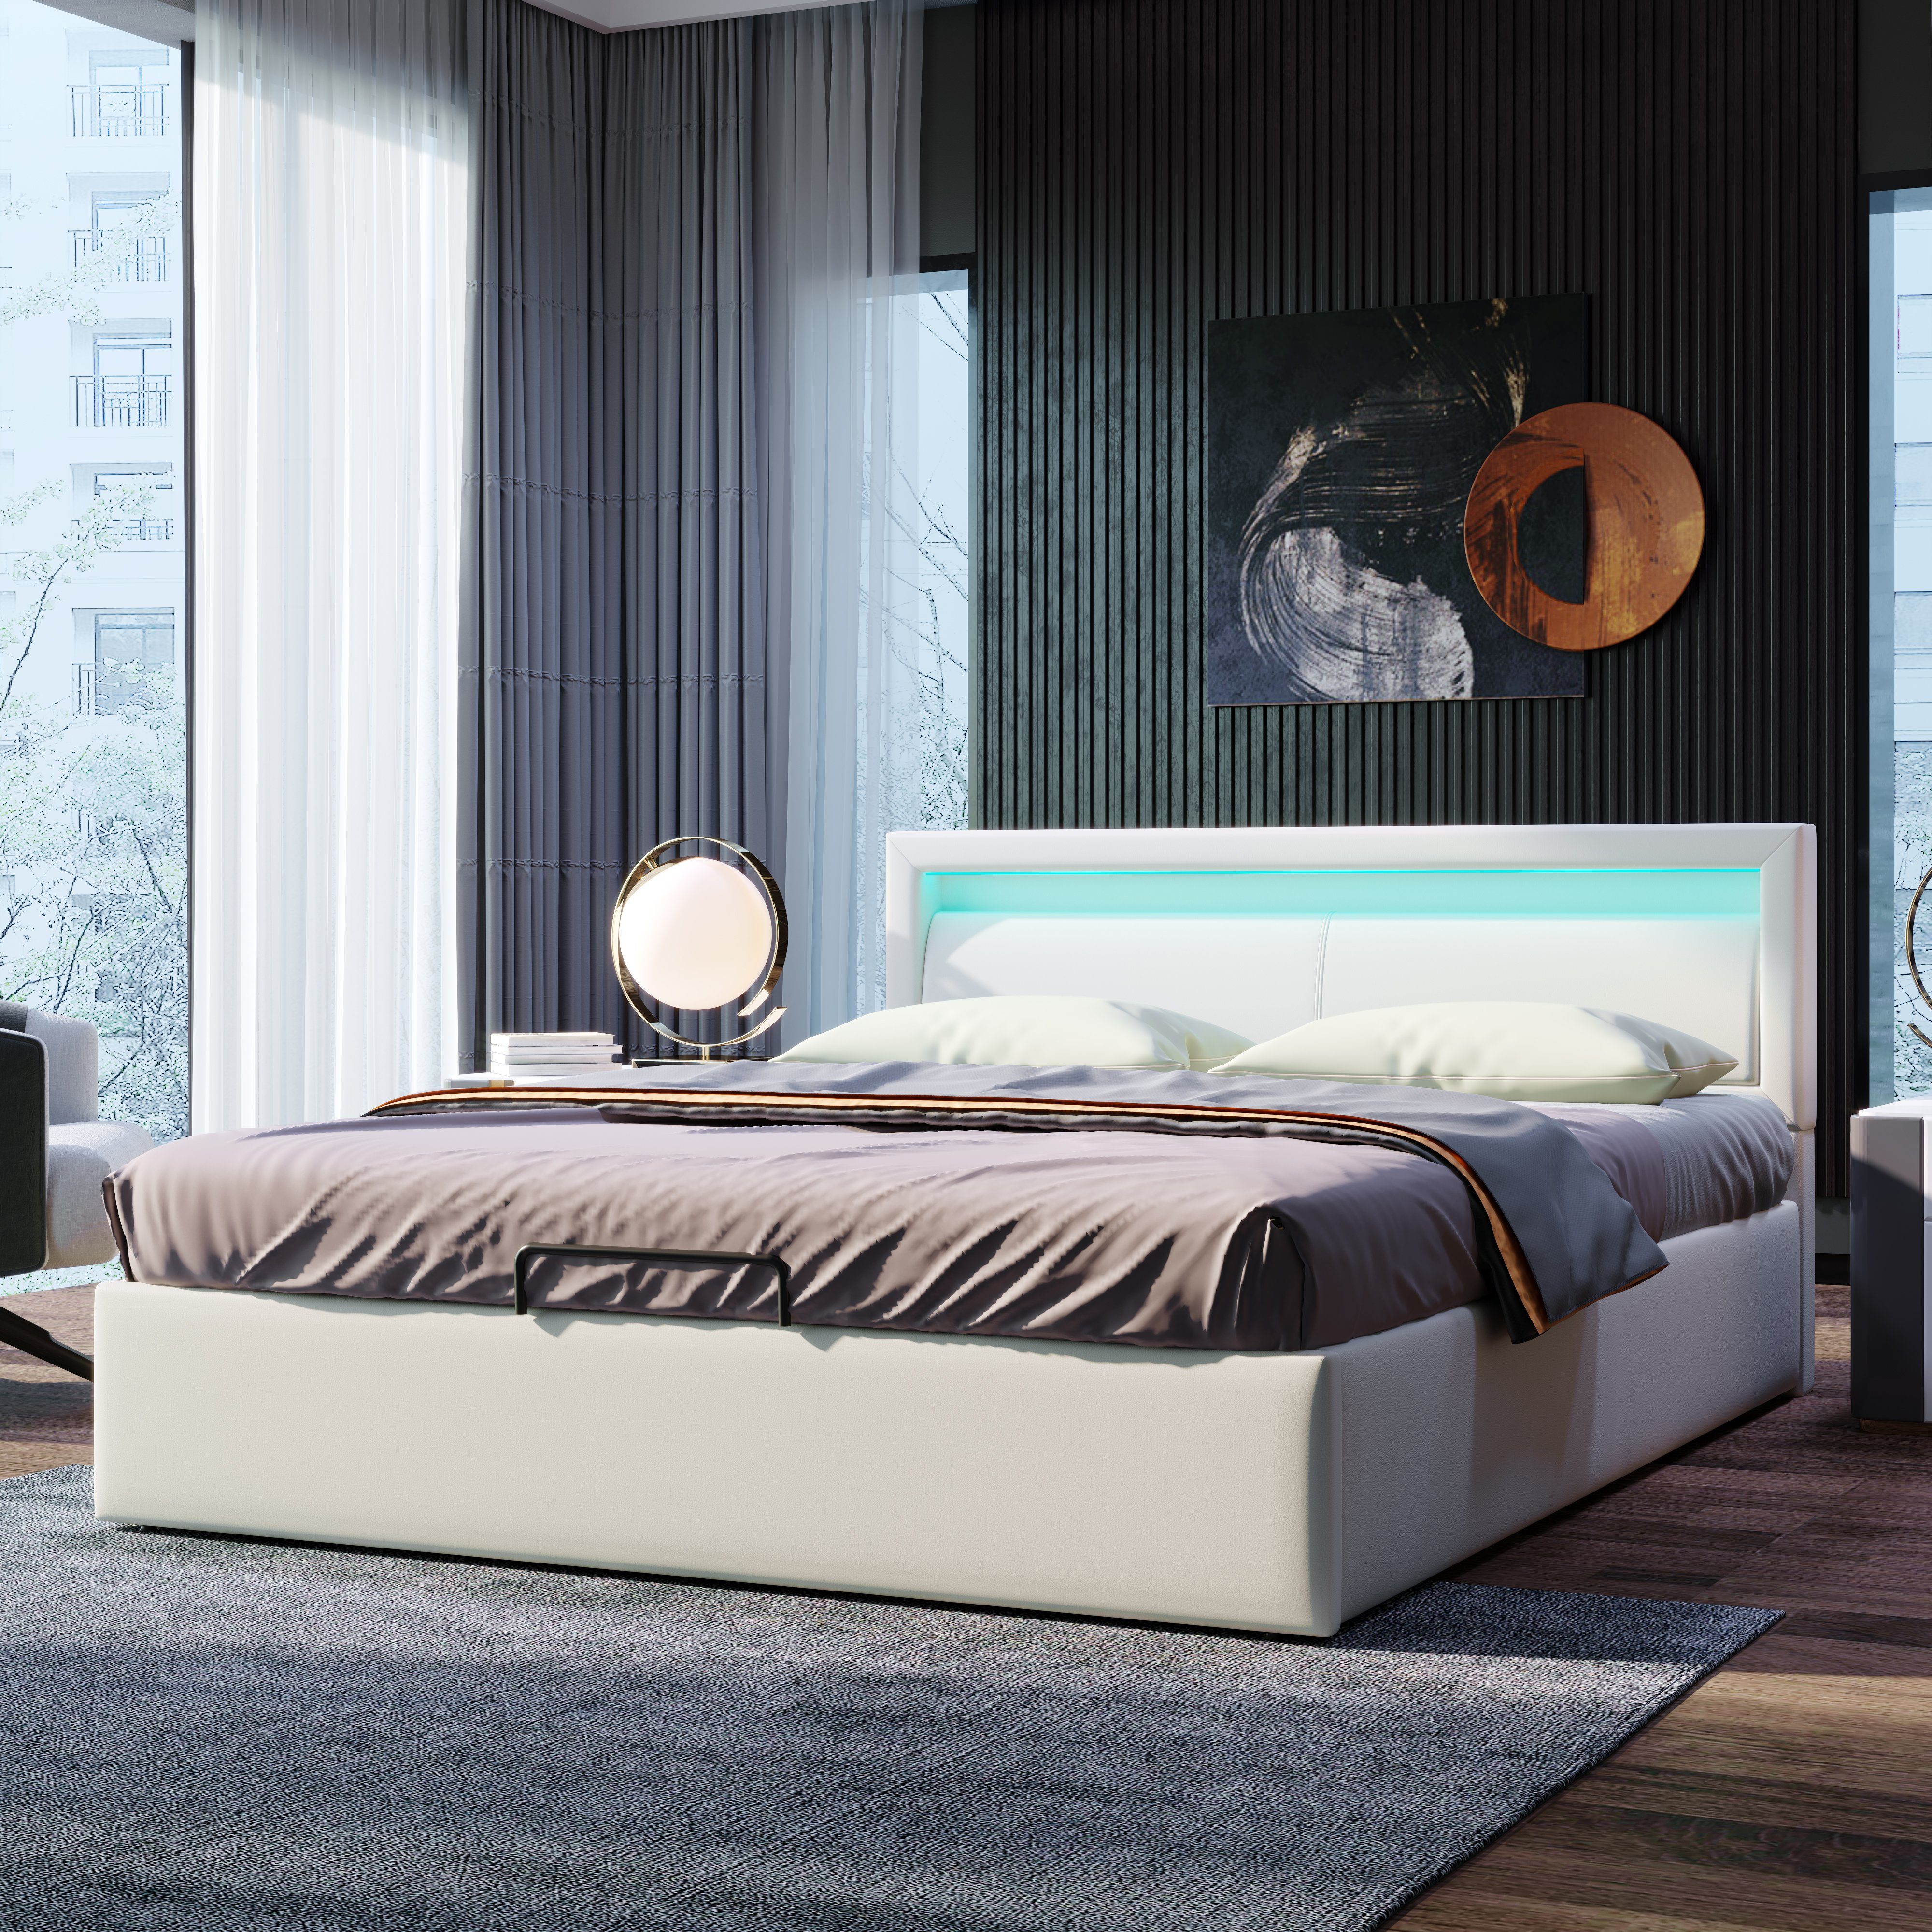 MODFU Polsterbett 140*200cm LED-Bett,mit Lattenrost und Stauraum, mit beleuchtetem, mit beleuchtetem Kopfteil in diversen Farben